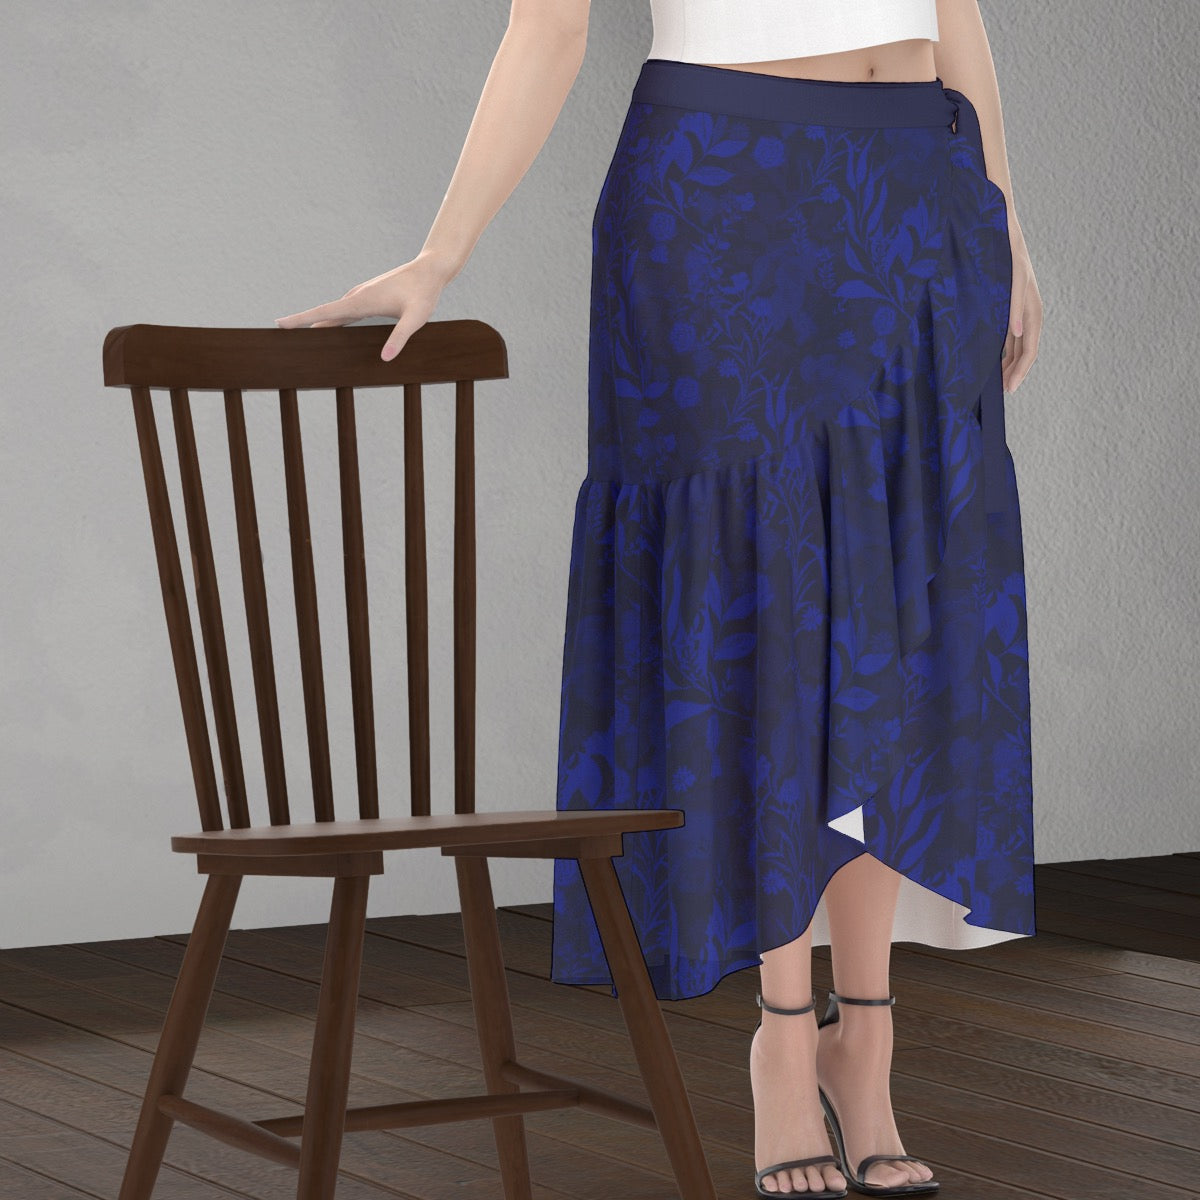 Caracas Collection Blue Wrap Skirt. Design hand-painted by the Designer Maria Alejandra Echenique